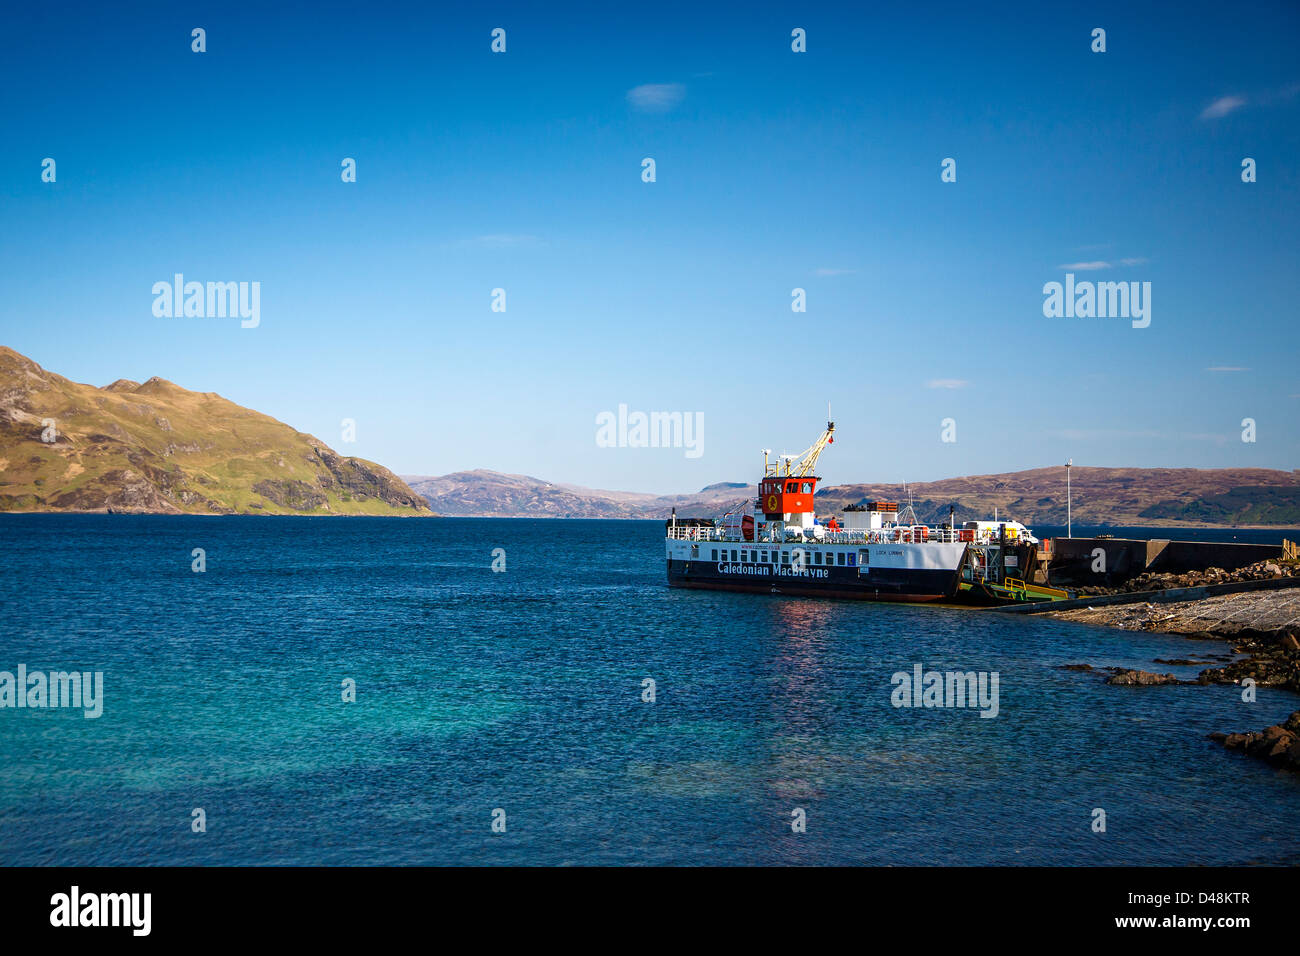 Caledonian macbrayne ferry at Kilchoan, Ardnamurchan, Highlands, Scotland uk Stock Photo